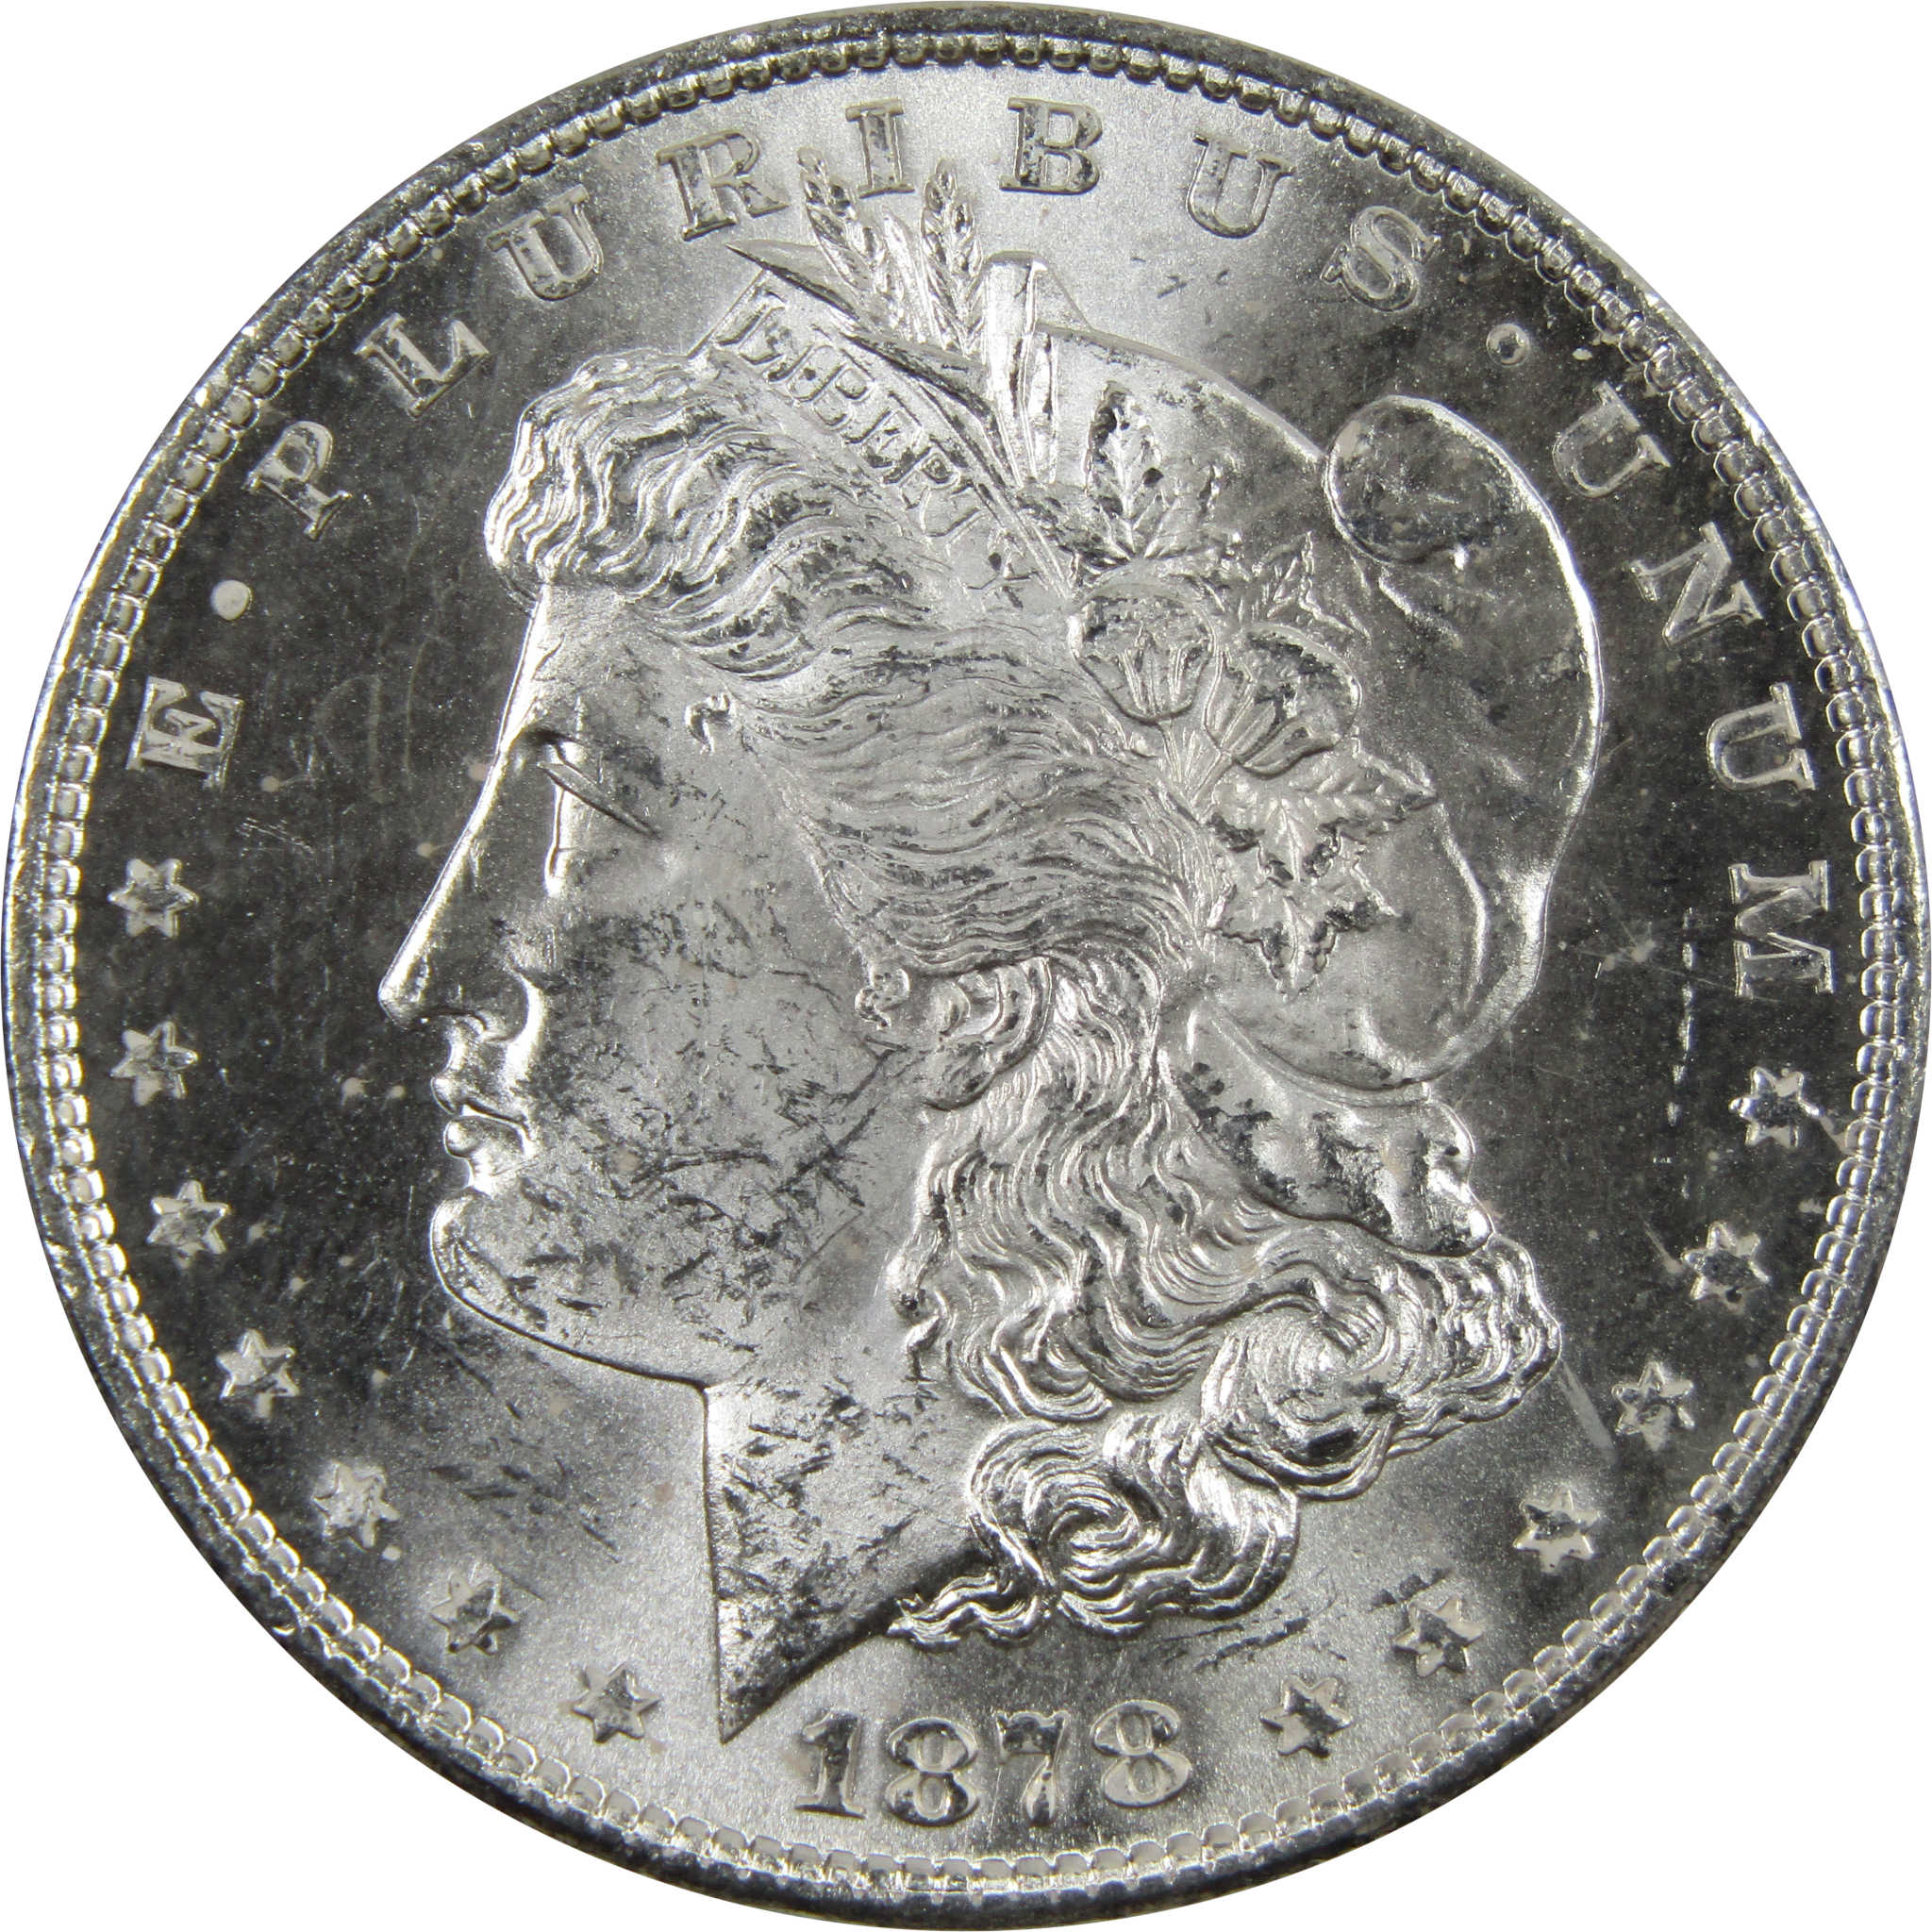 1878 S Morgan Dollar BU Choice Uncirculated 90% Silver $1 SKU:I4792 - Morgan coin - Morgan silver dollar - Morgan silver dollar for sale - Profile Coins &amp; Collectibles